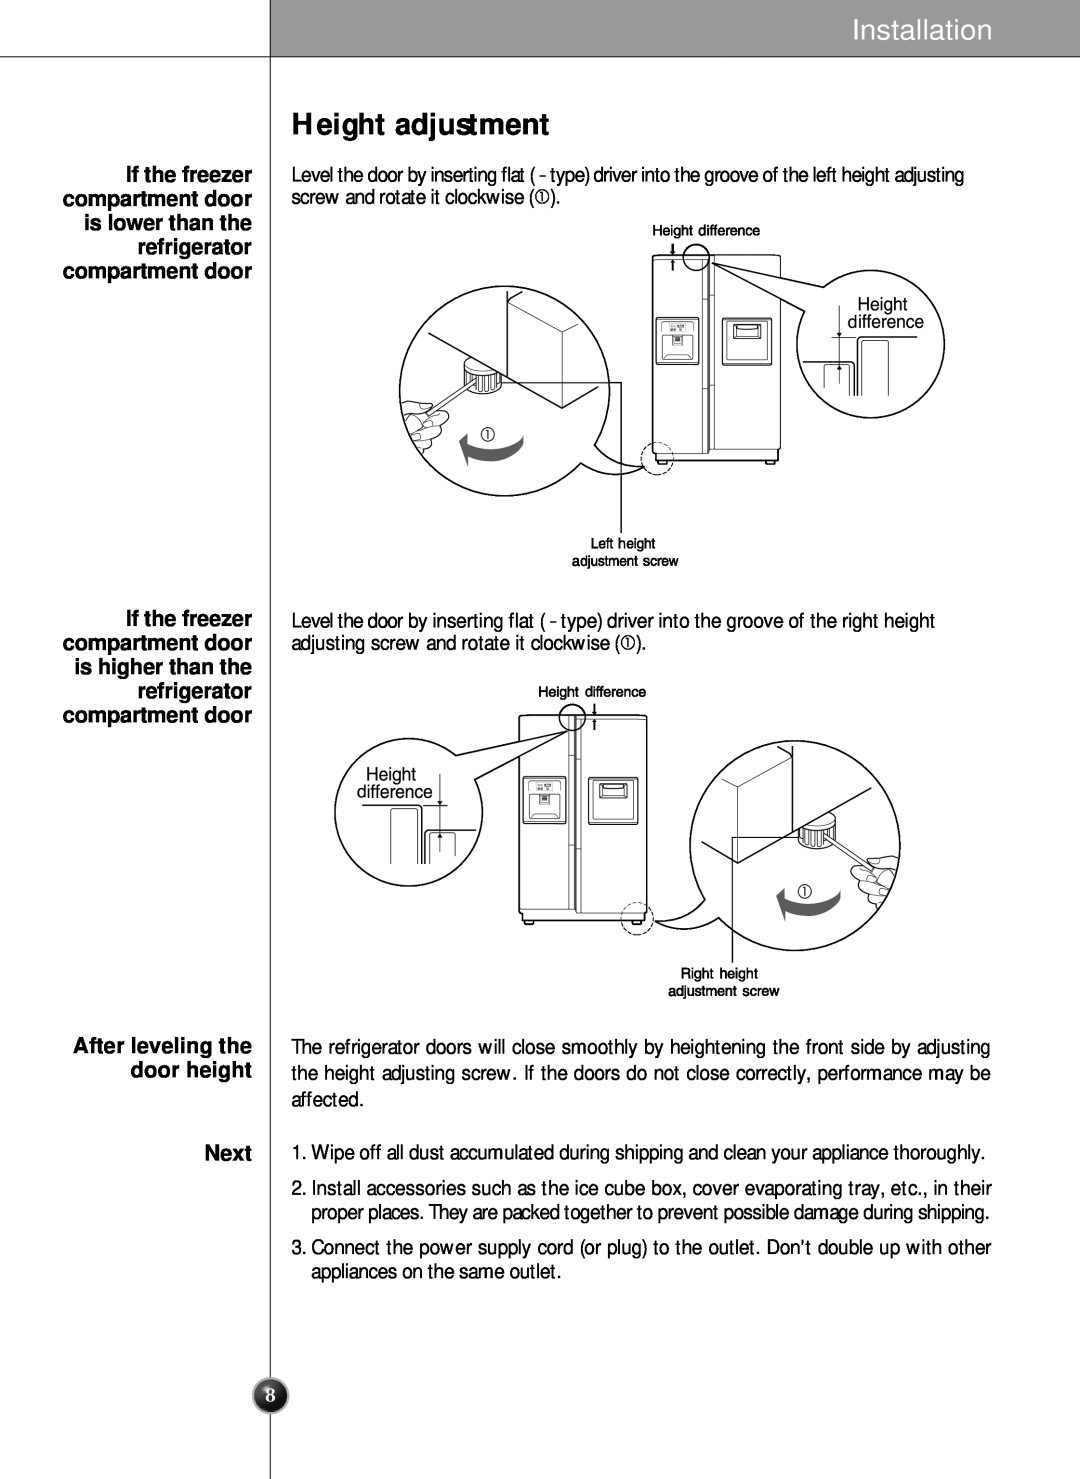 LG Electronics SXS Height adjustment, If the freezer compartment door, compartment door If the freezer, Next, Installation 